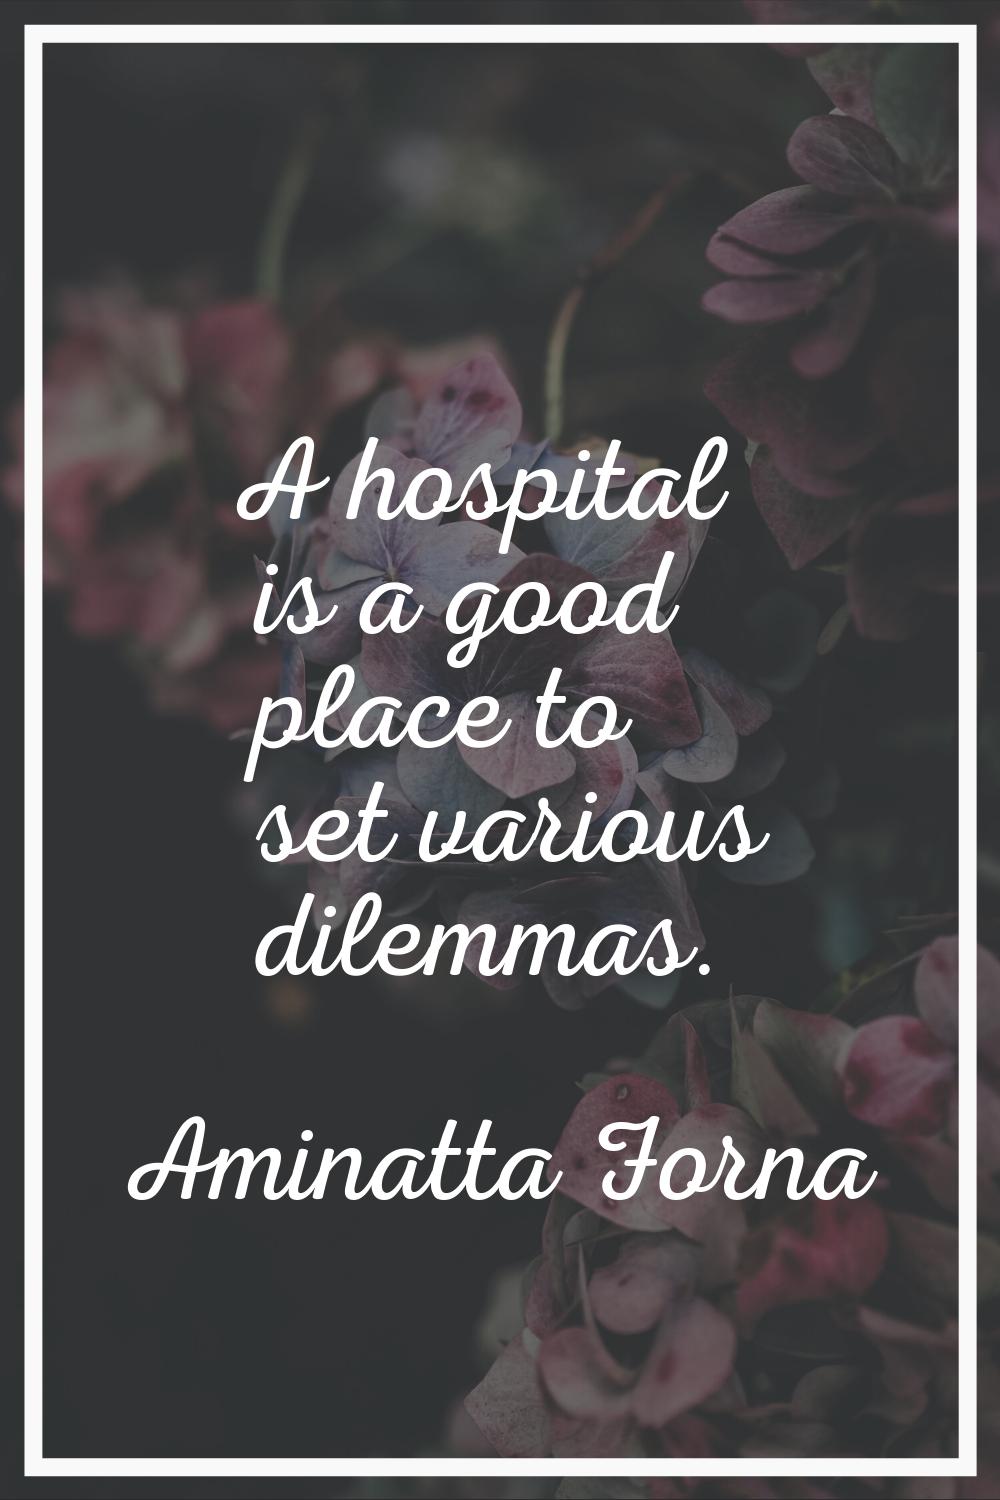 A hospital is a good place to set various dilemmas.